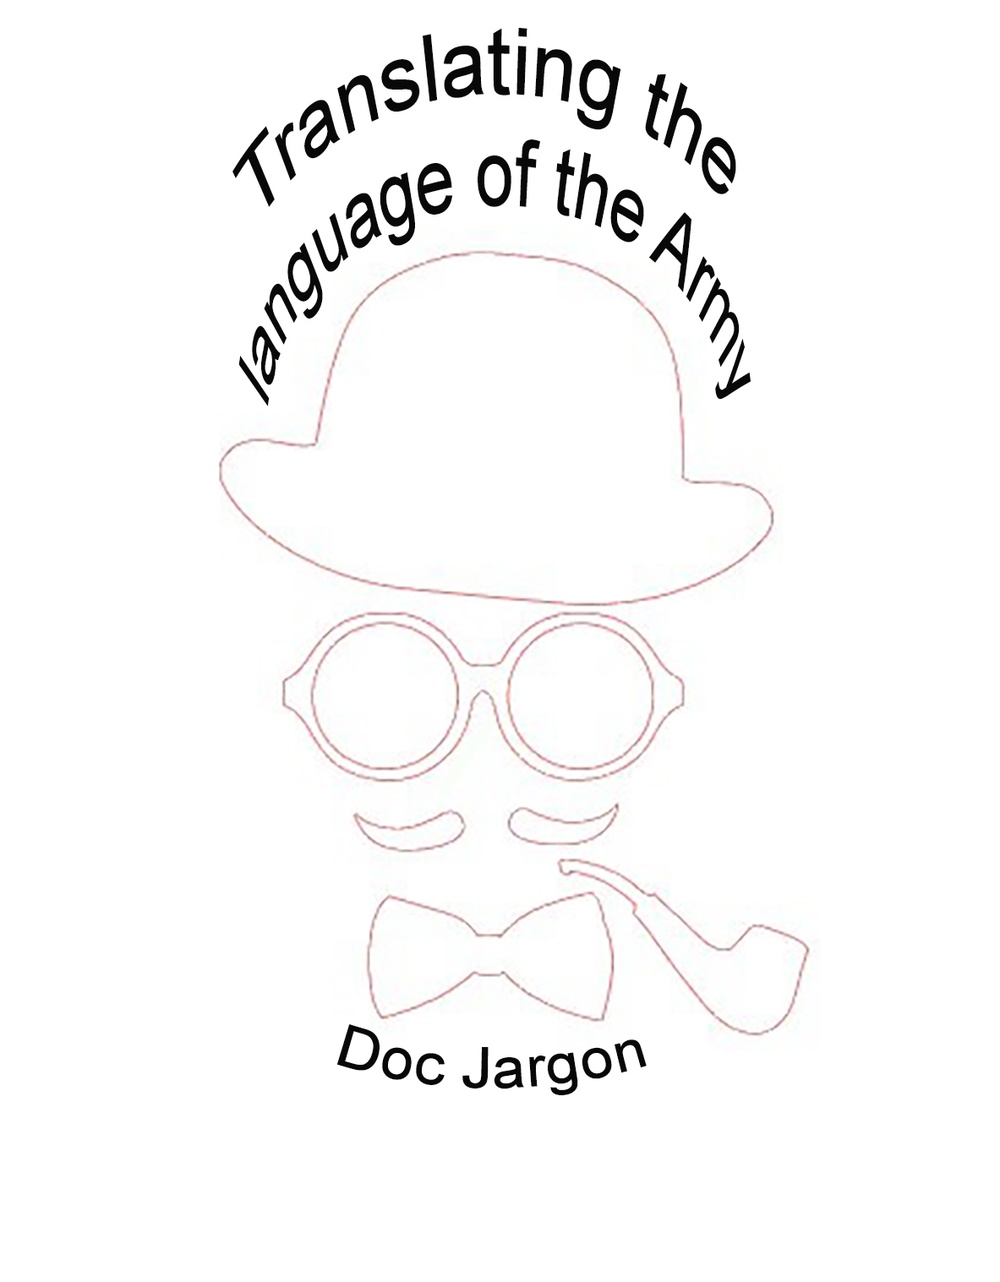 Doc Jargon